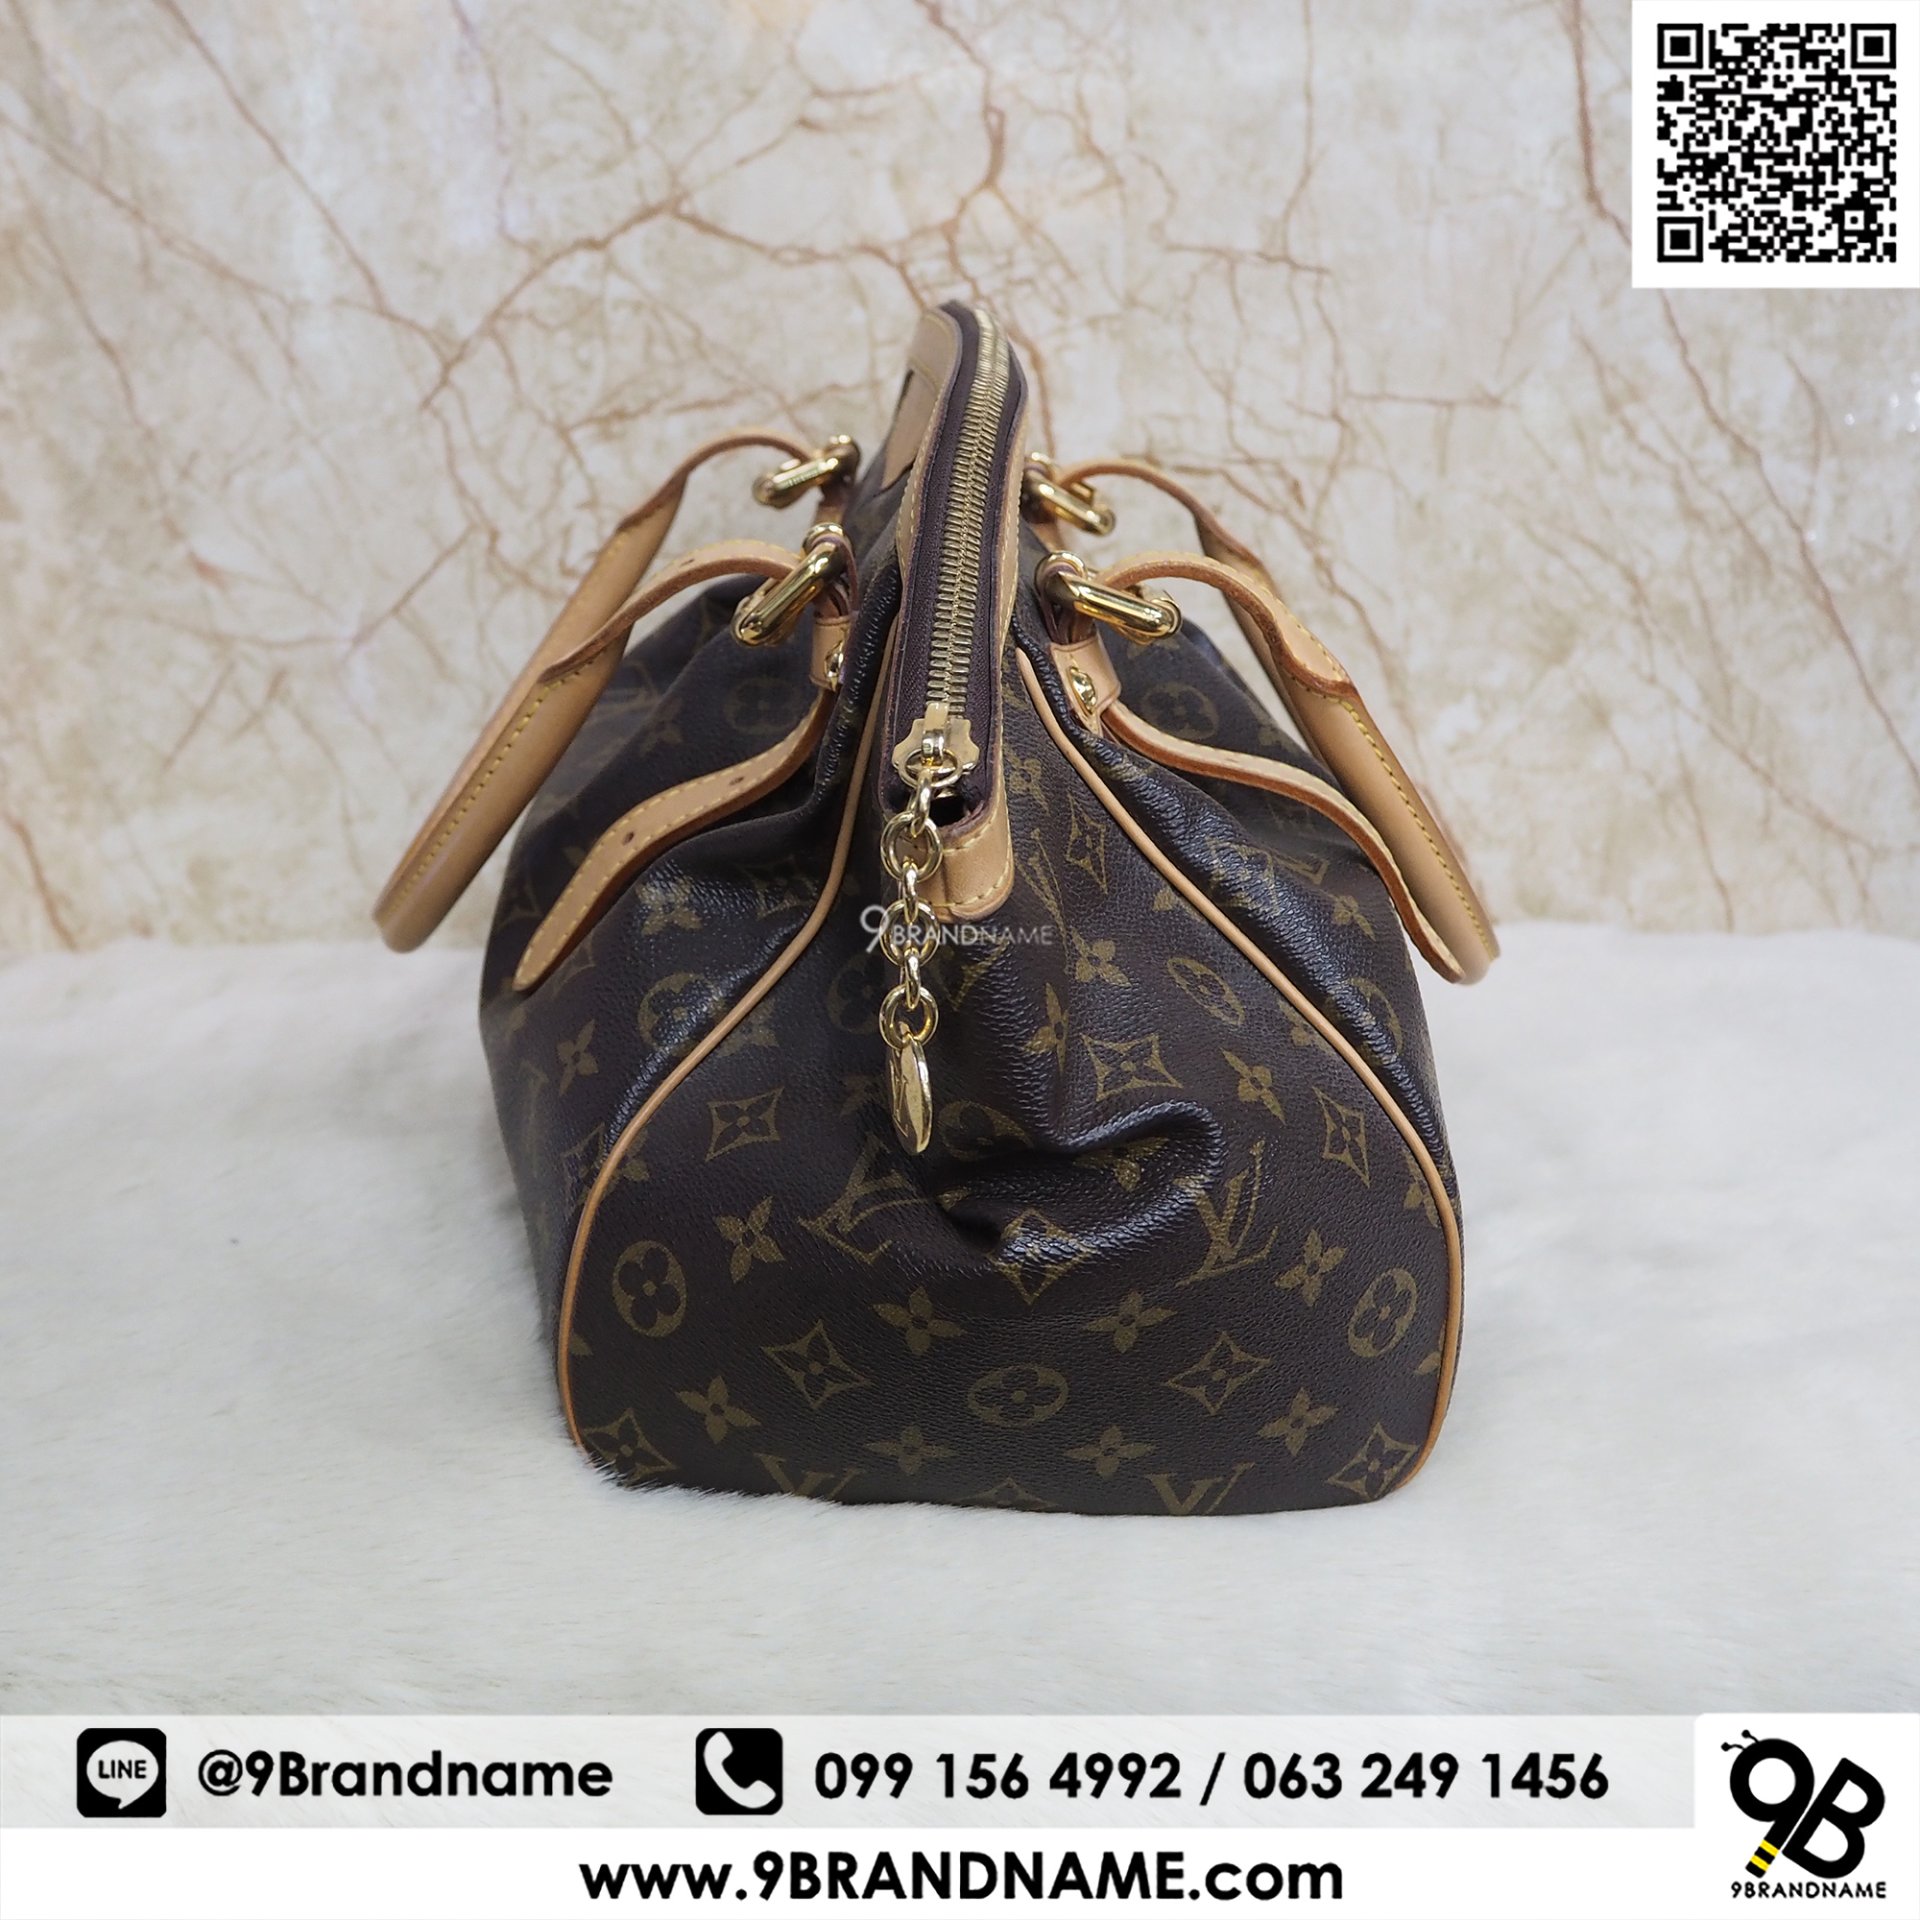 Buy [Used] LOUIS VUITTON Tivoli GM Handbag Monogram M40144 from